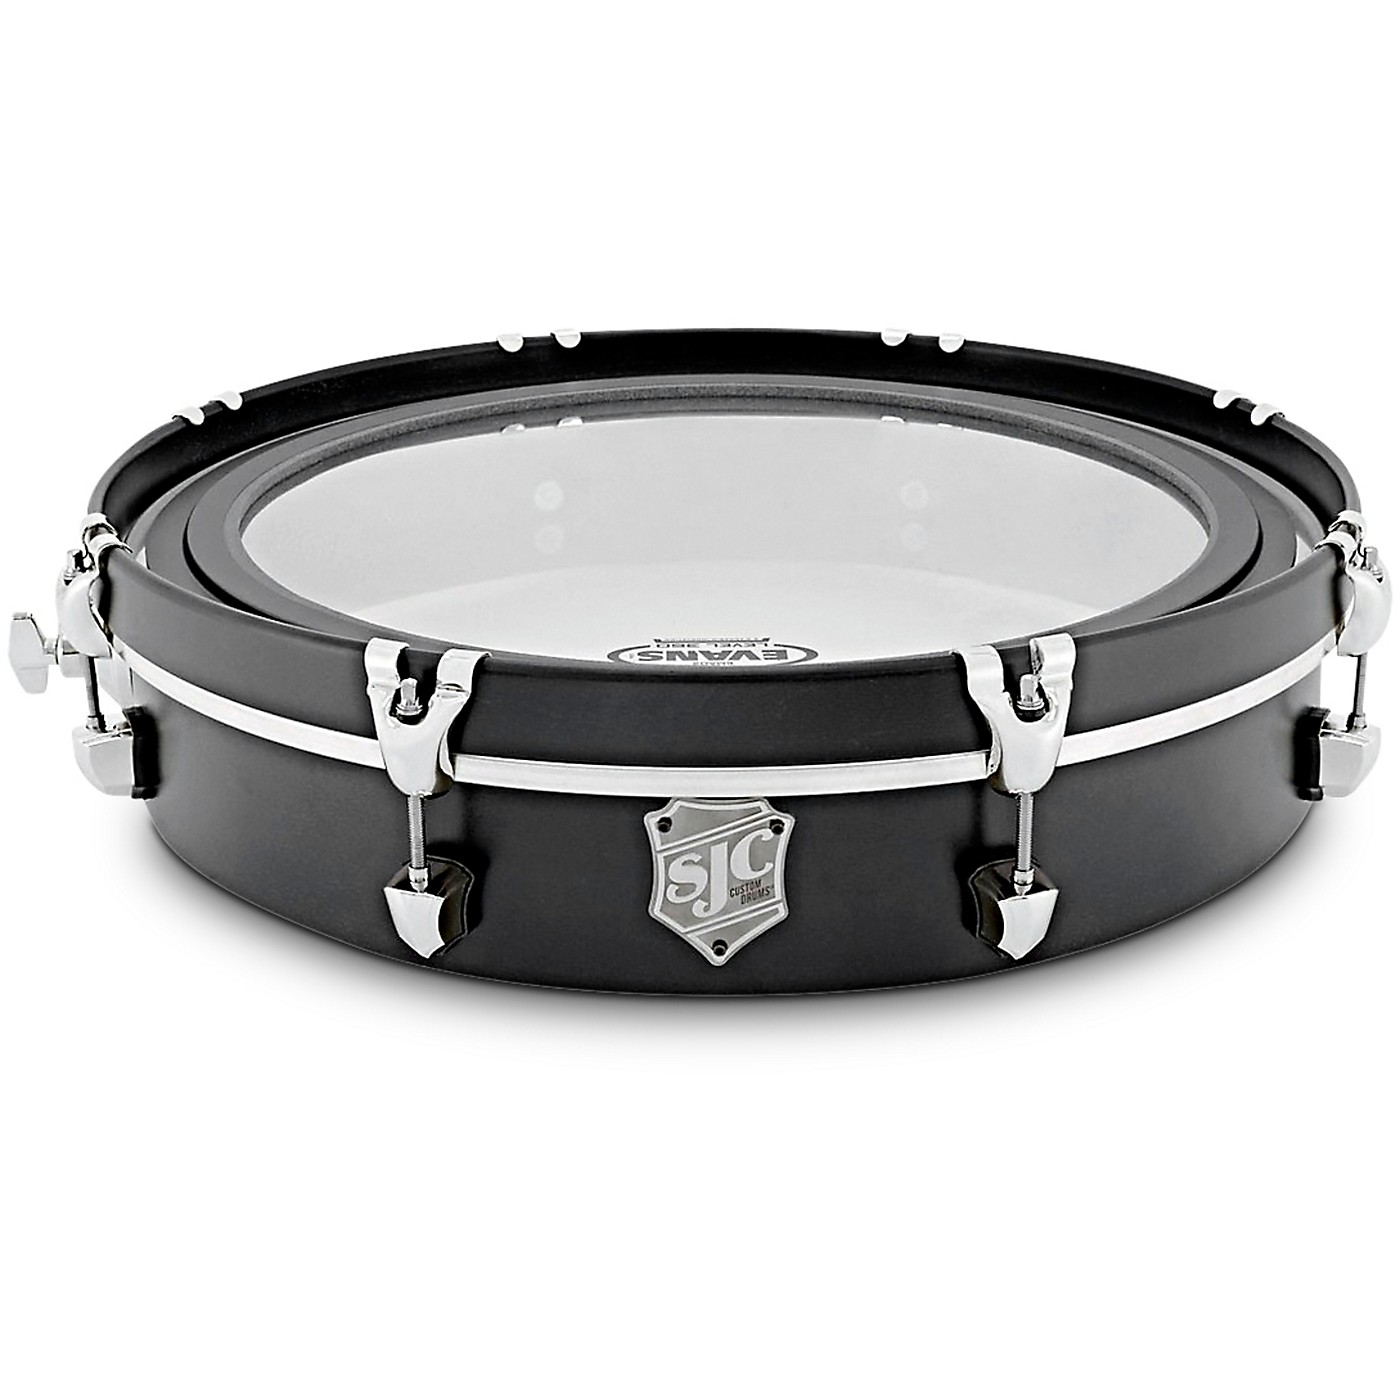 SJC Drums UFO Drum with Chrome Hardware thumbnail